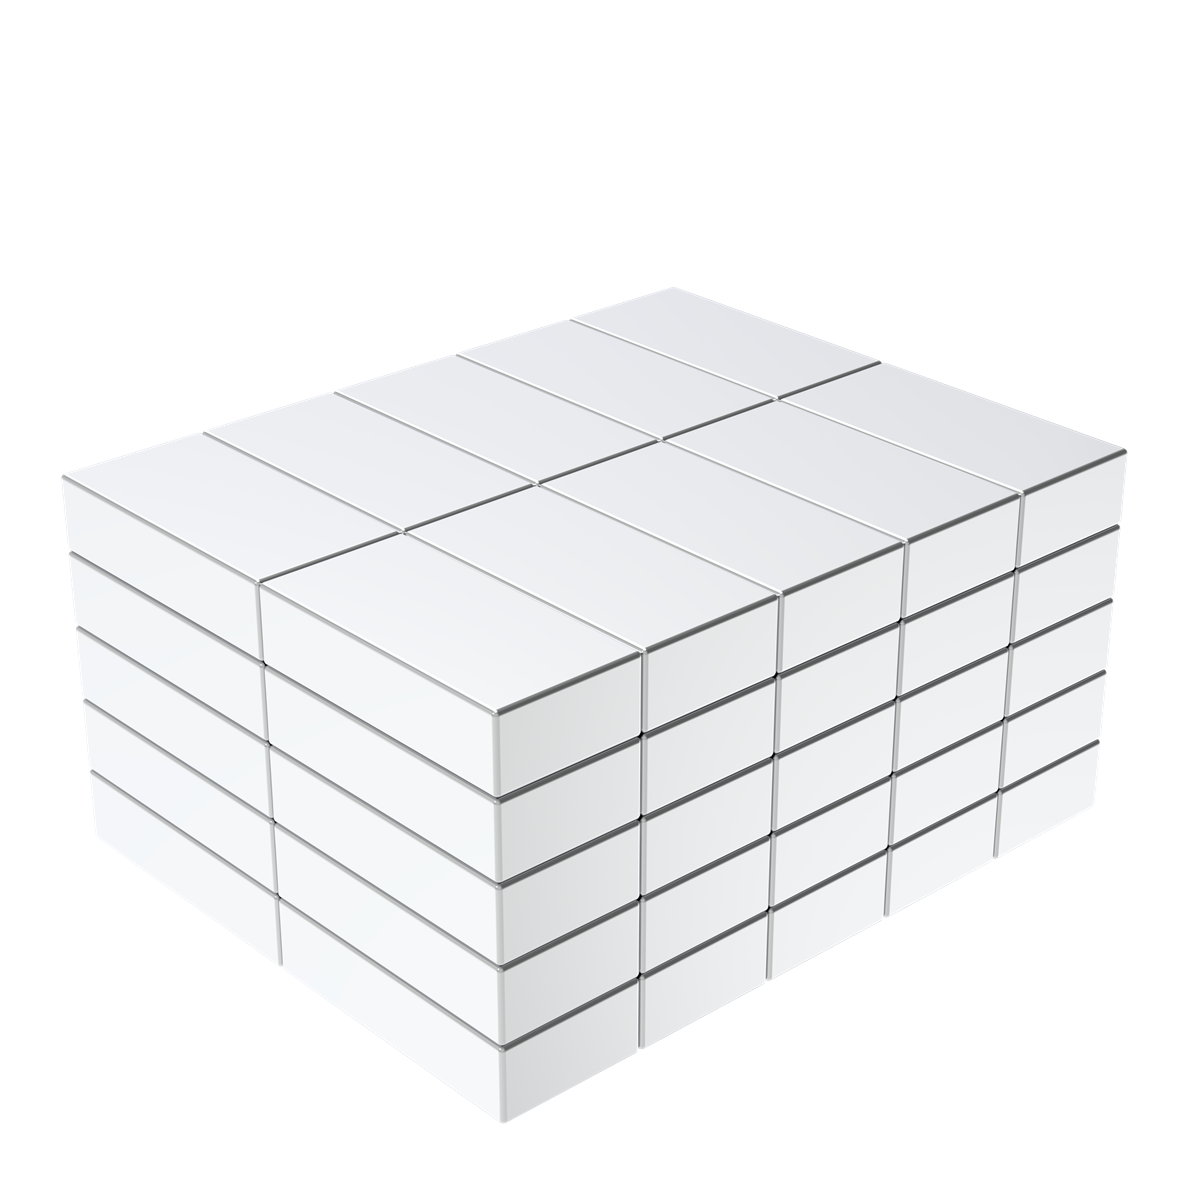 1/2 x 1/4 x 1/8 Inch Neodymium Rare Earth Block Magnets N52 (50 Pack)